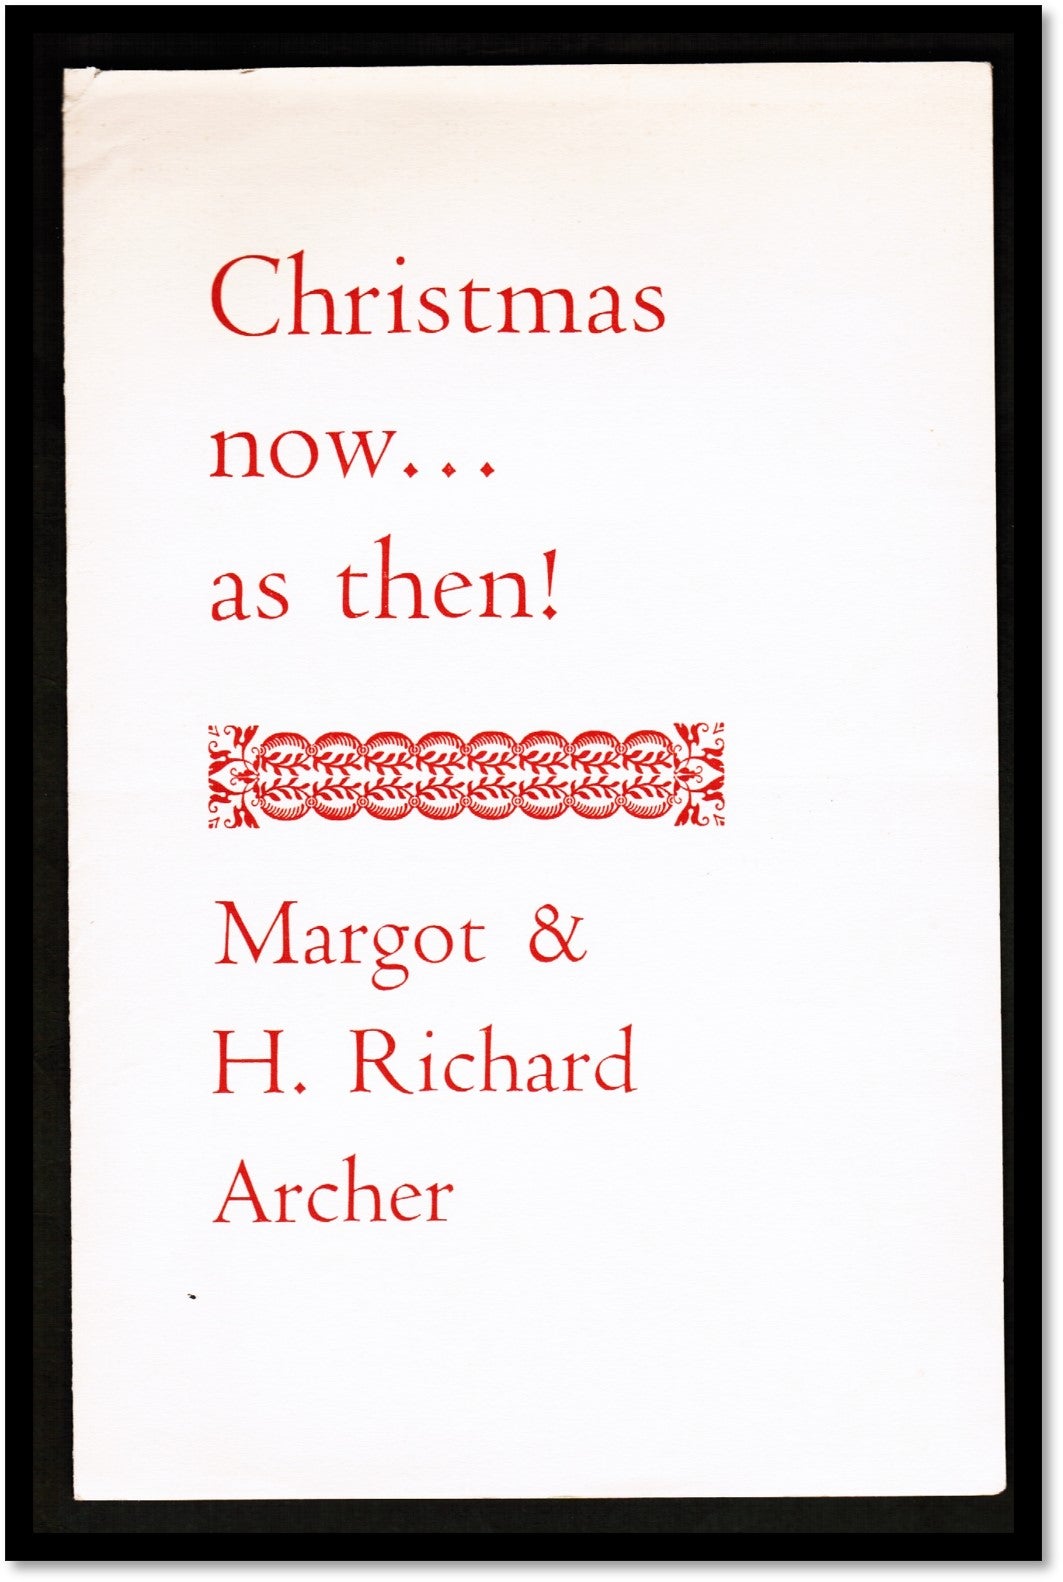 [Letterpress] [Grant Dahlstrom] [Castle Press] Christmas now as then! for Margot & H. Richard Archer. Keepsake poem.